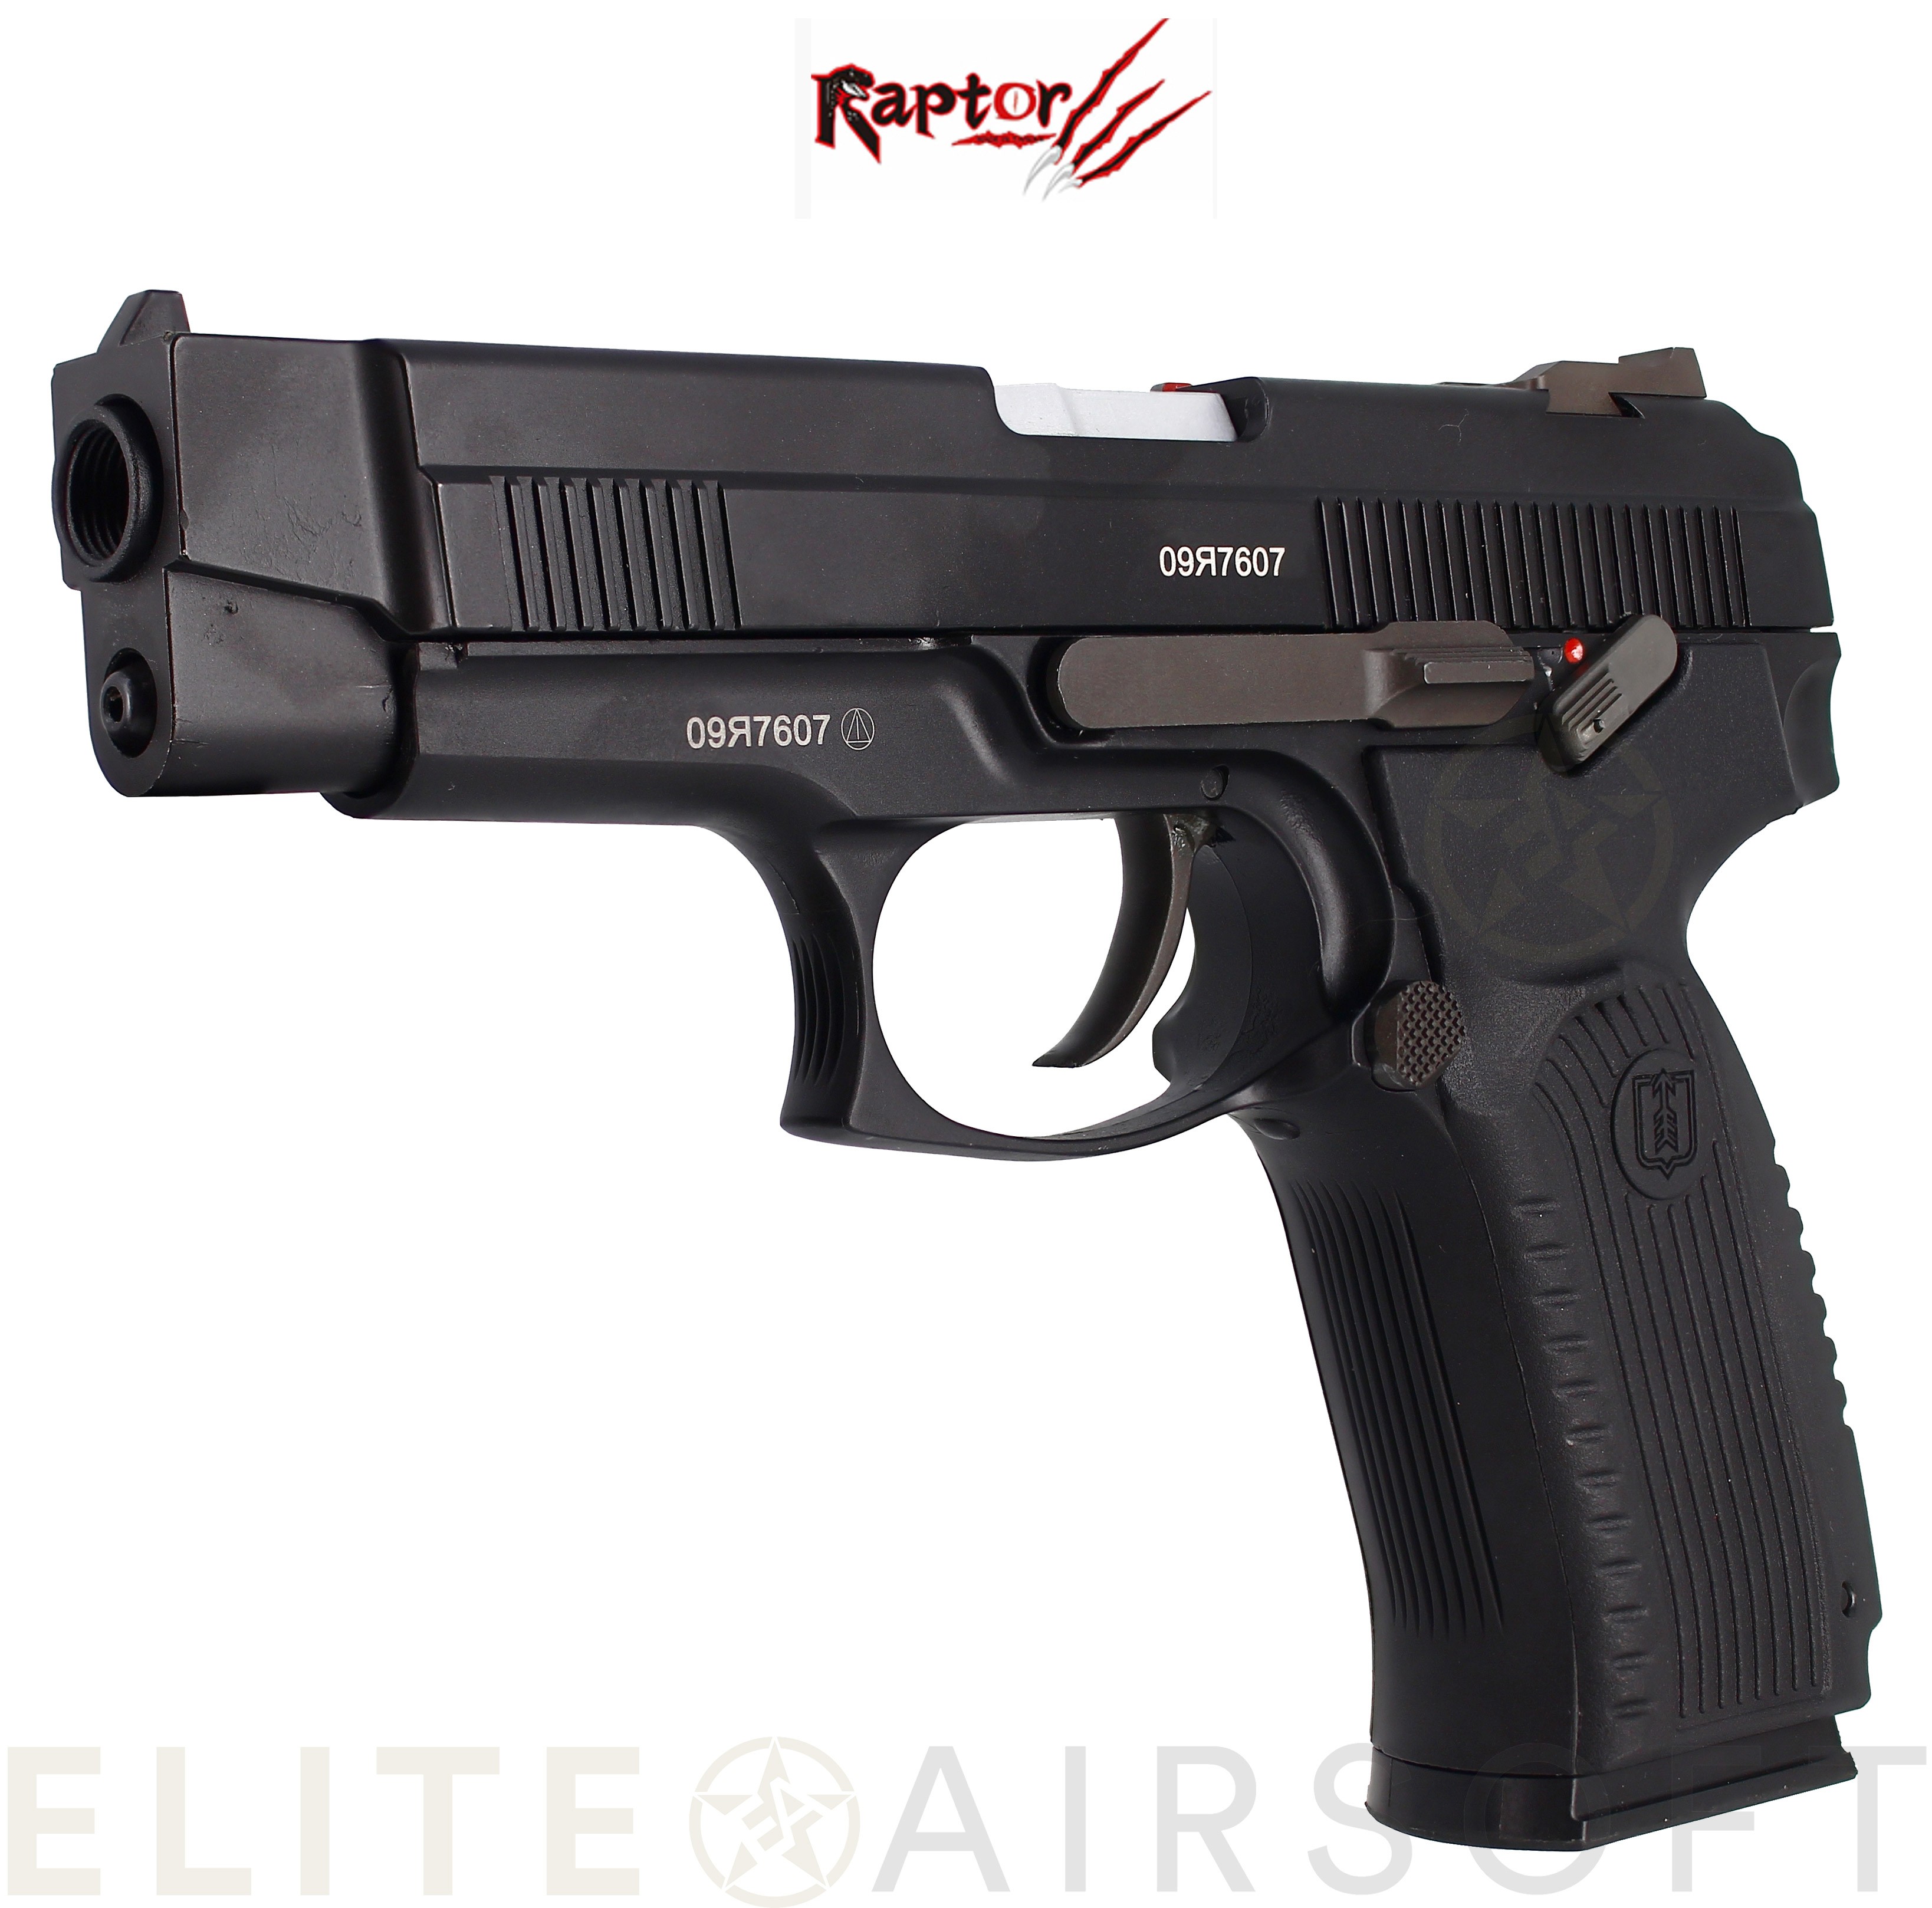 Raptor - Pistolet MP443 - GBB - GAZ - Noir (1 Joule)